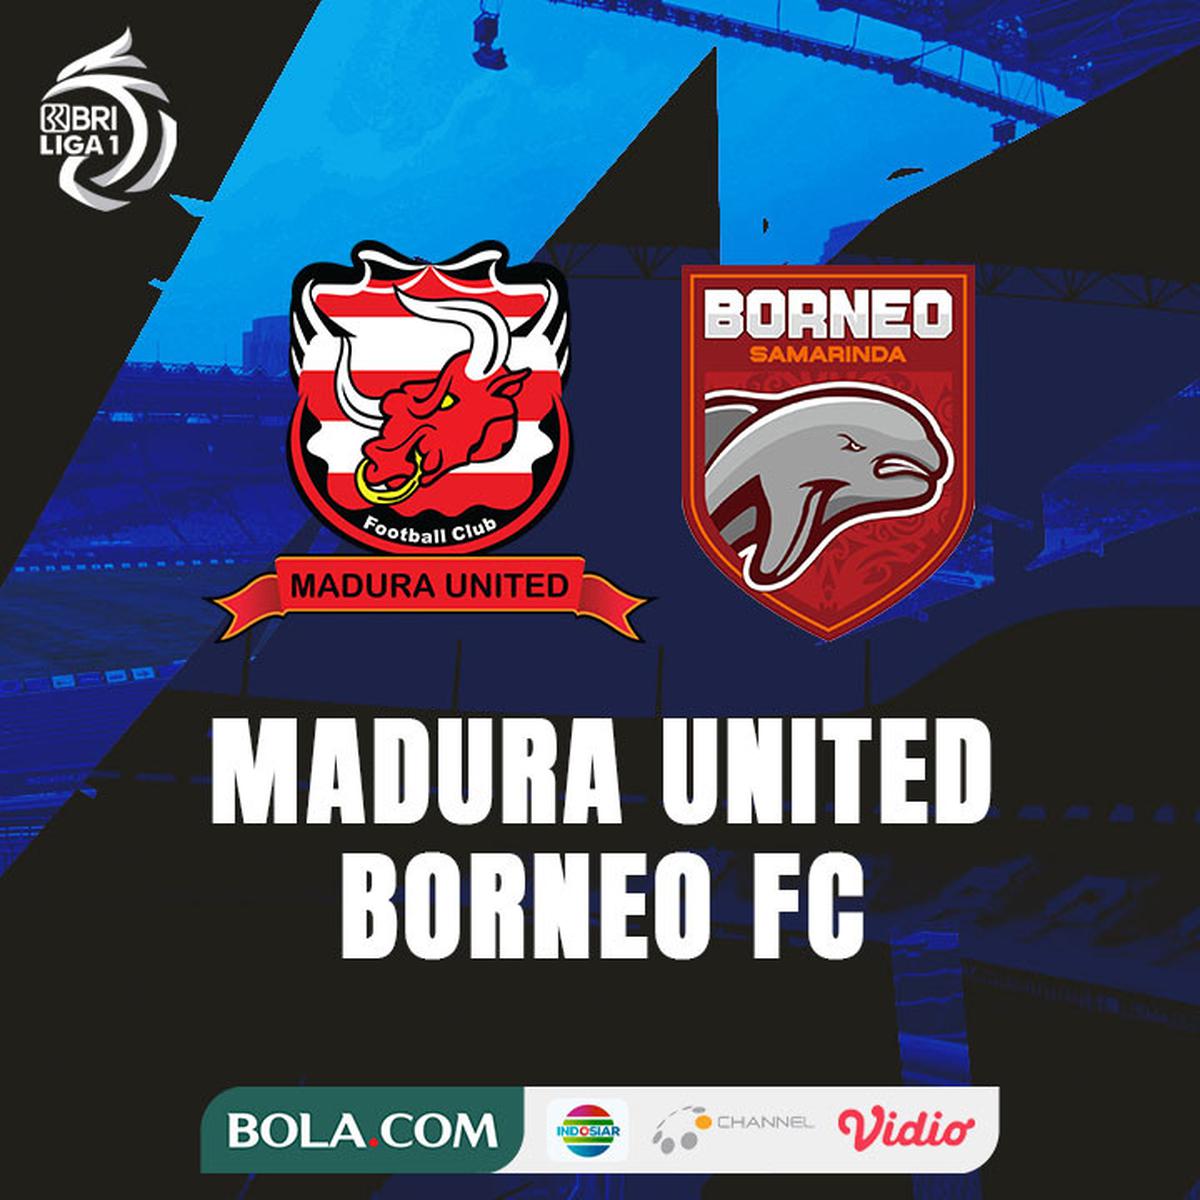 Borneo fc vs madura united